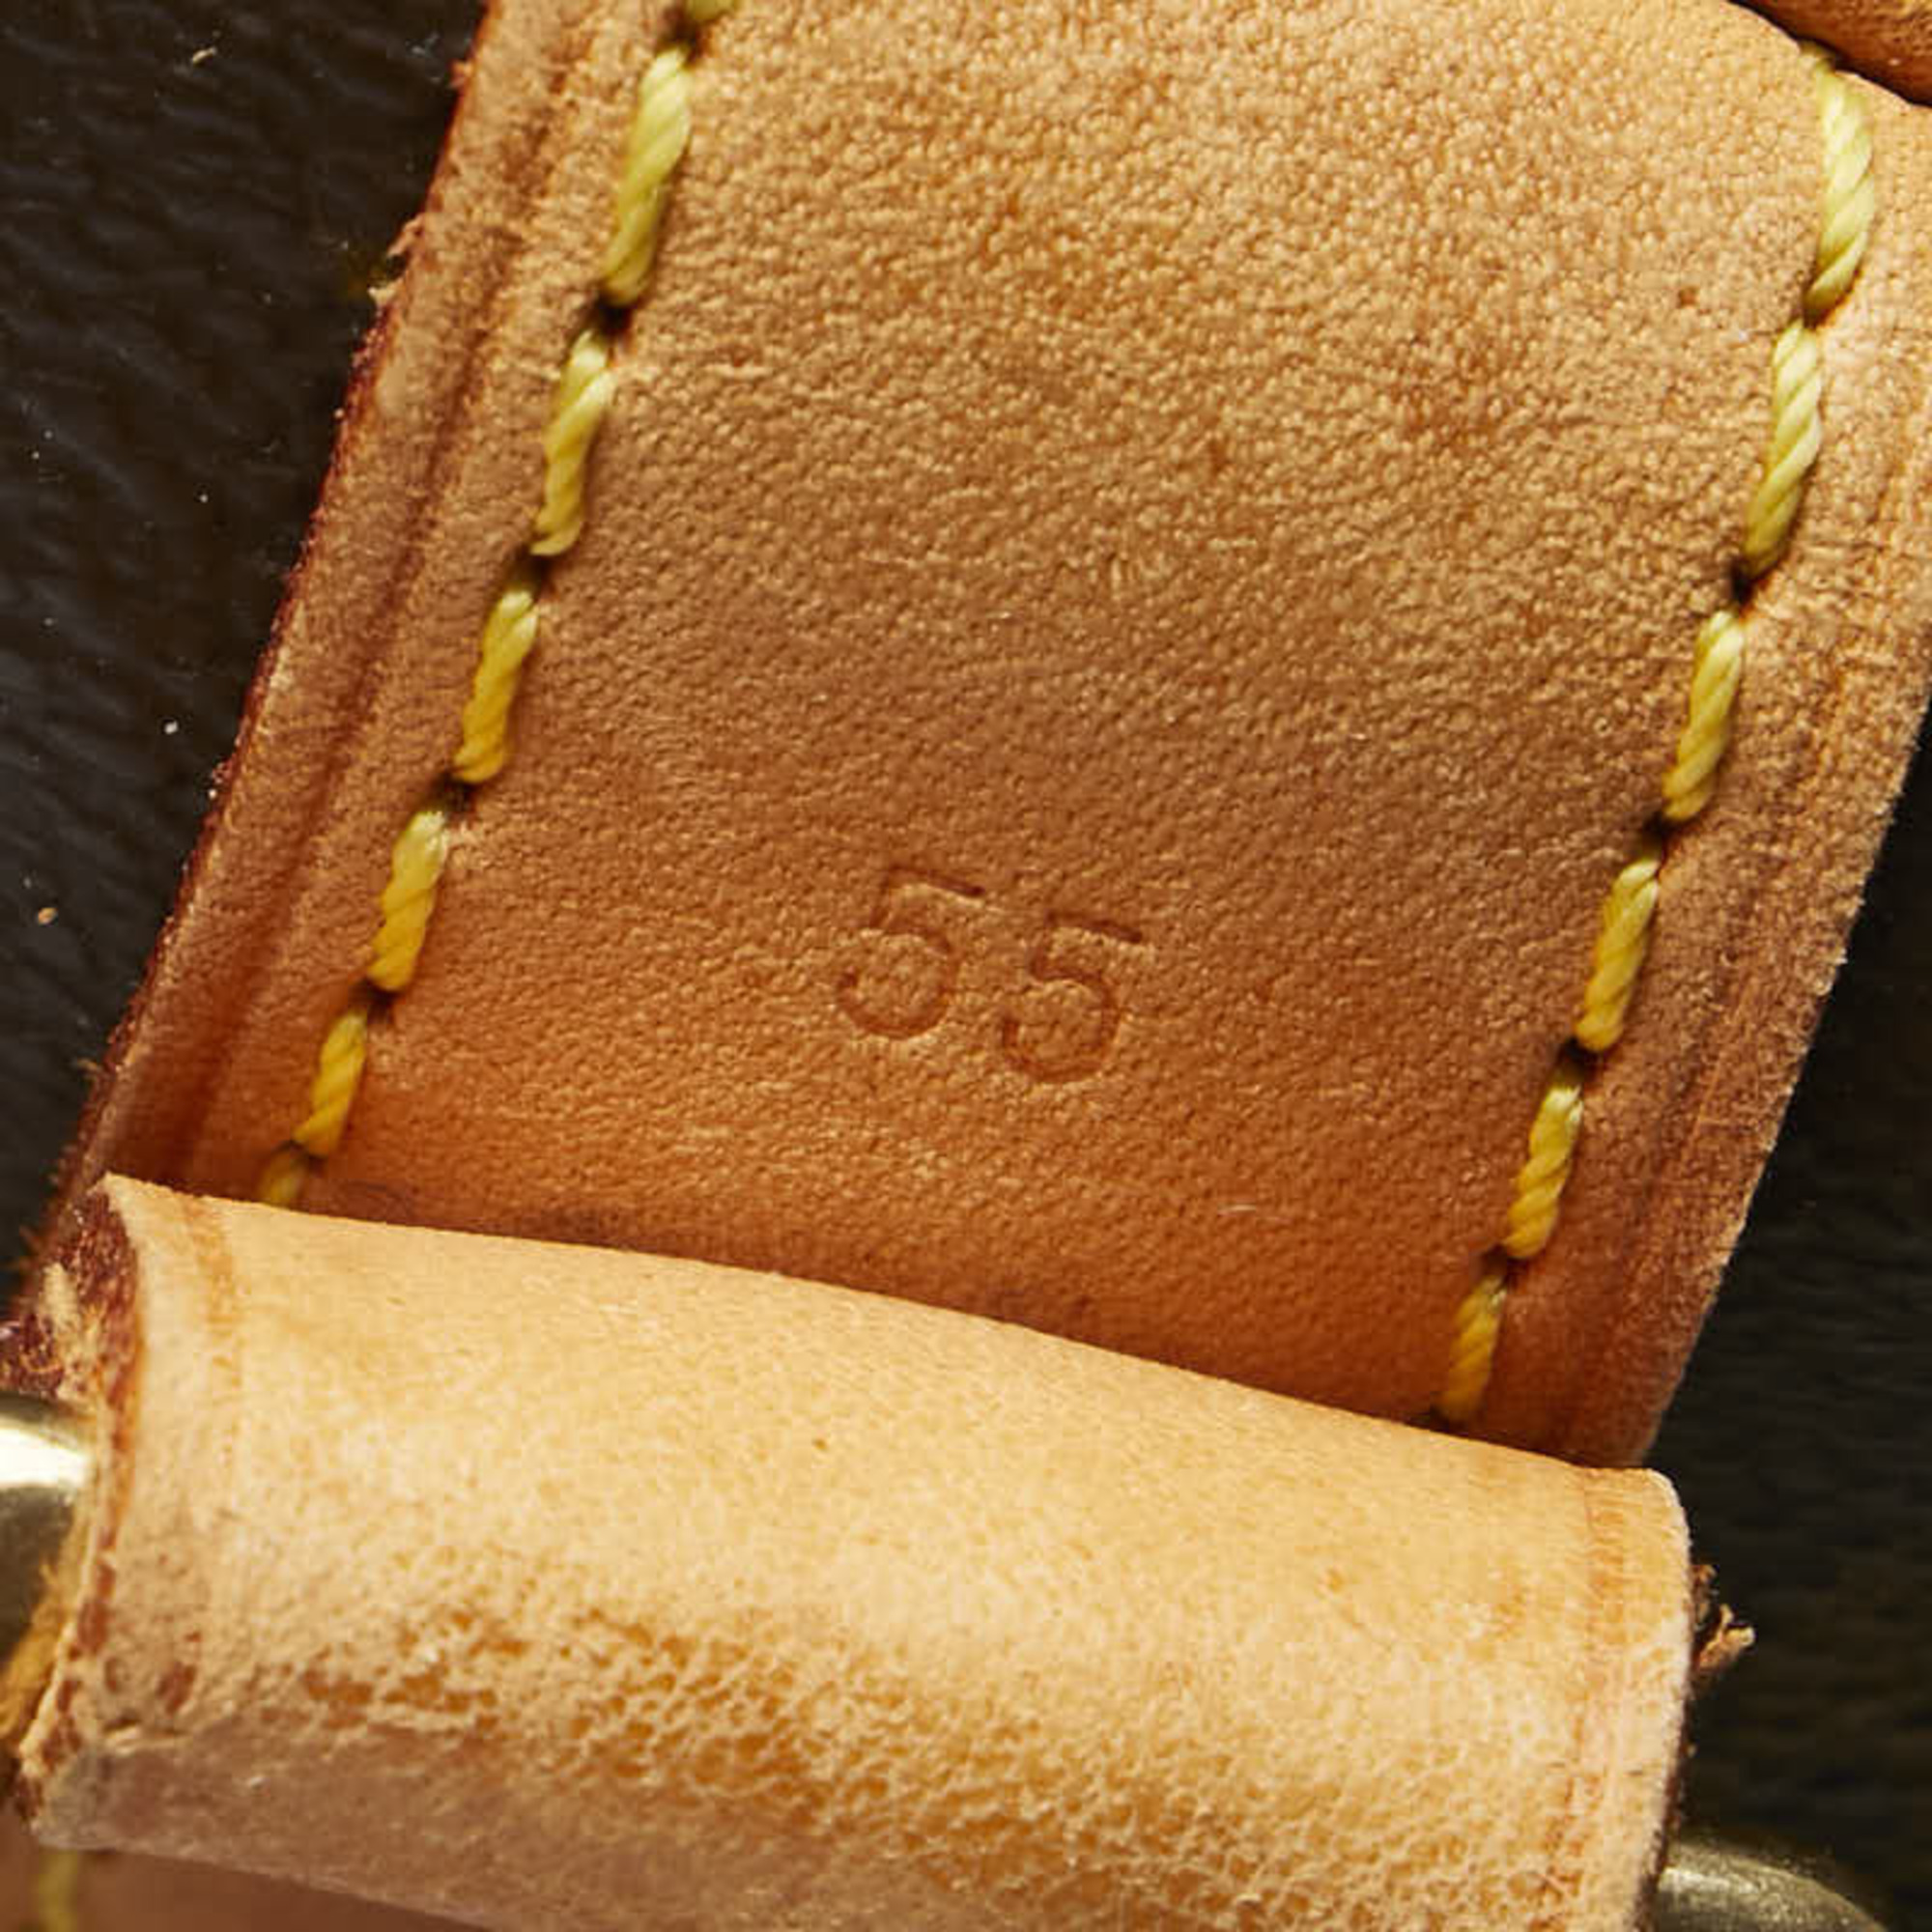 Louis Vuitton Monogram Keepall 55 Boston Bag Travel M41424 Brown PVC Leather Women's LOUIS VUITTON